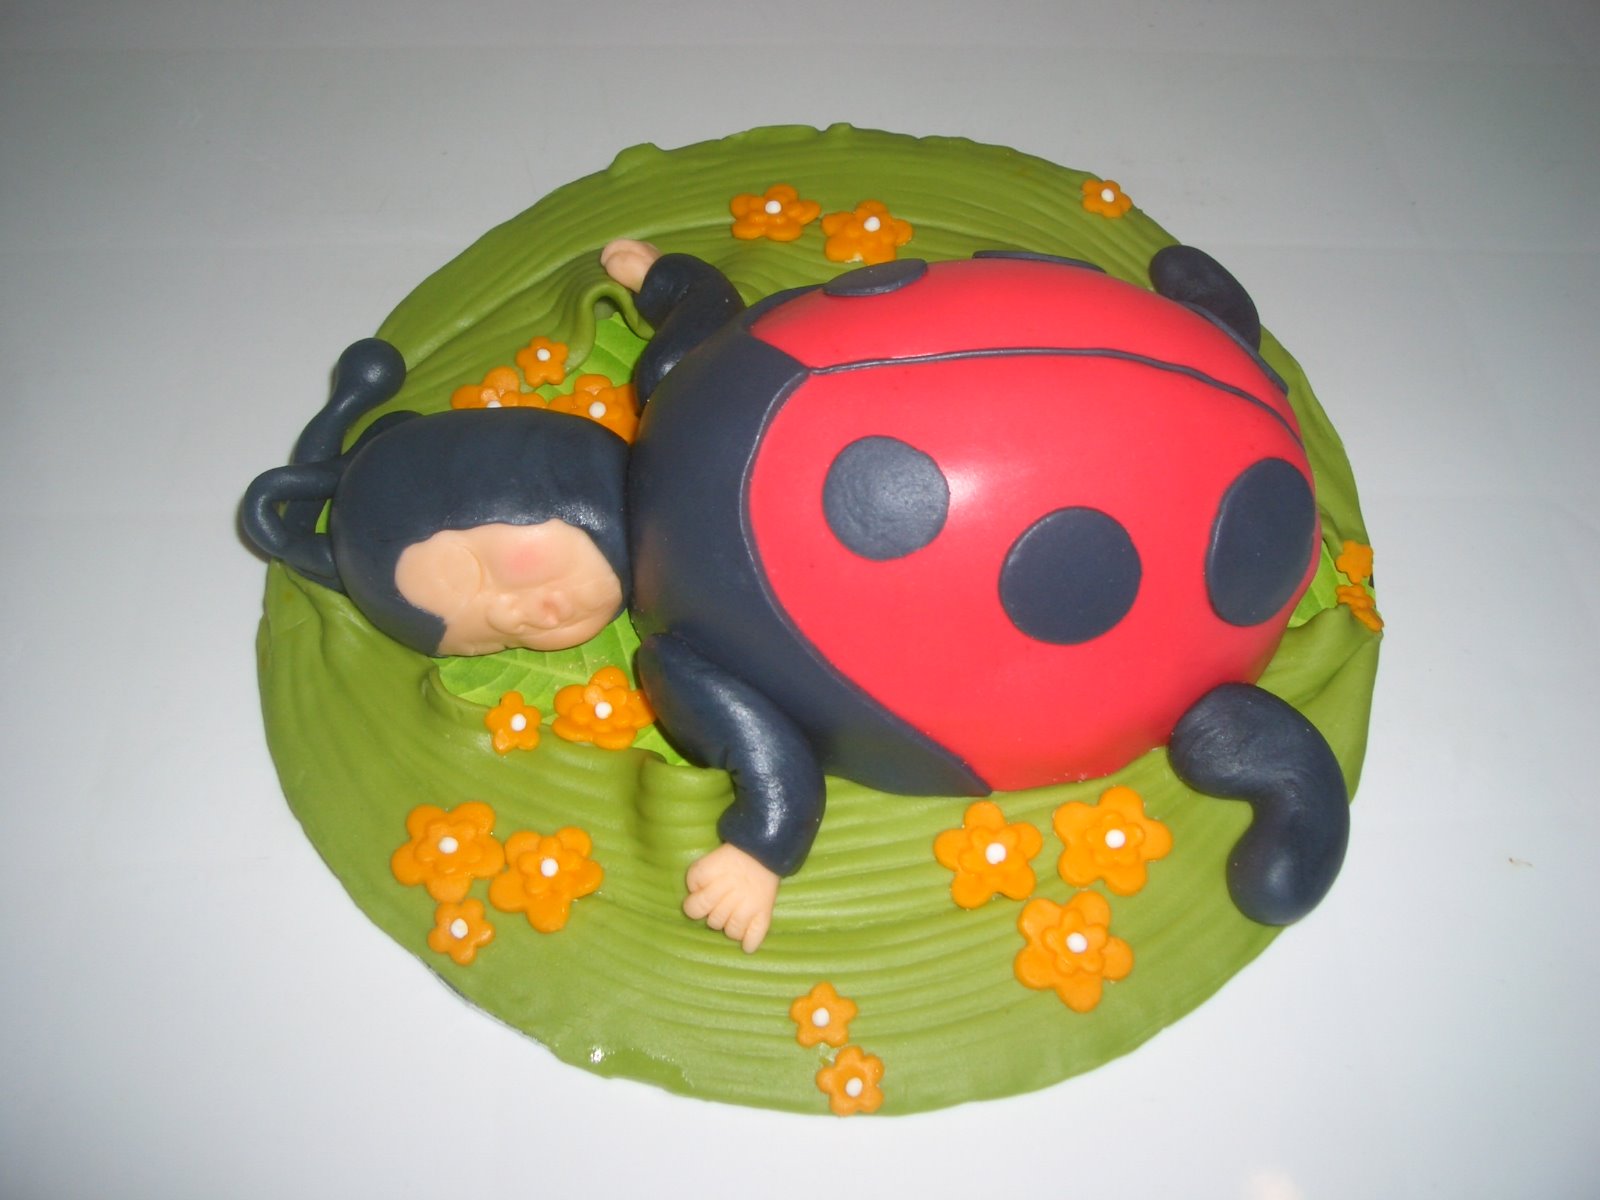 Sleeping ladybug cake